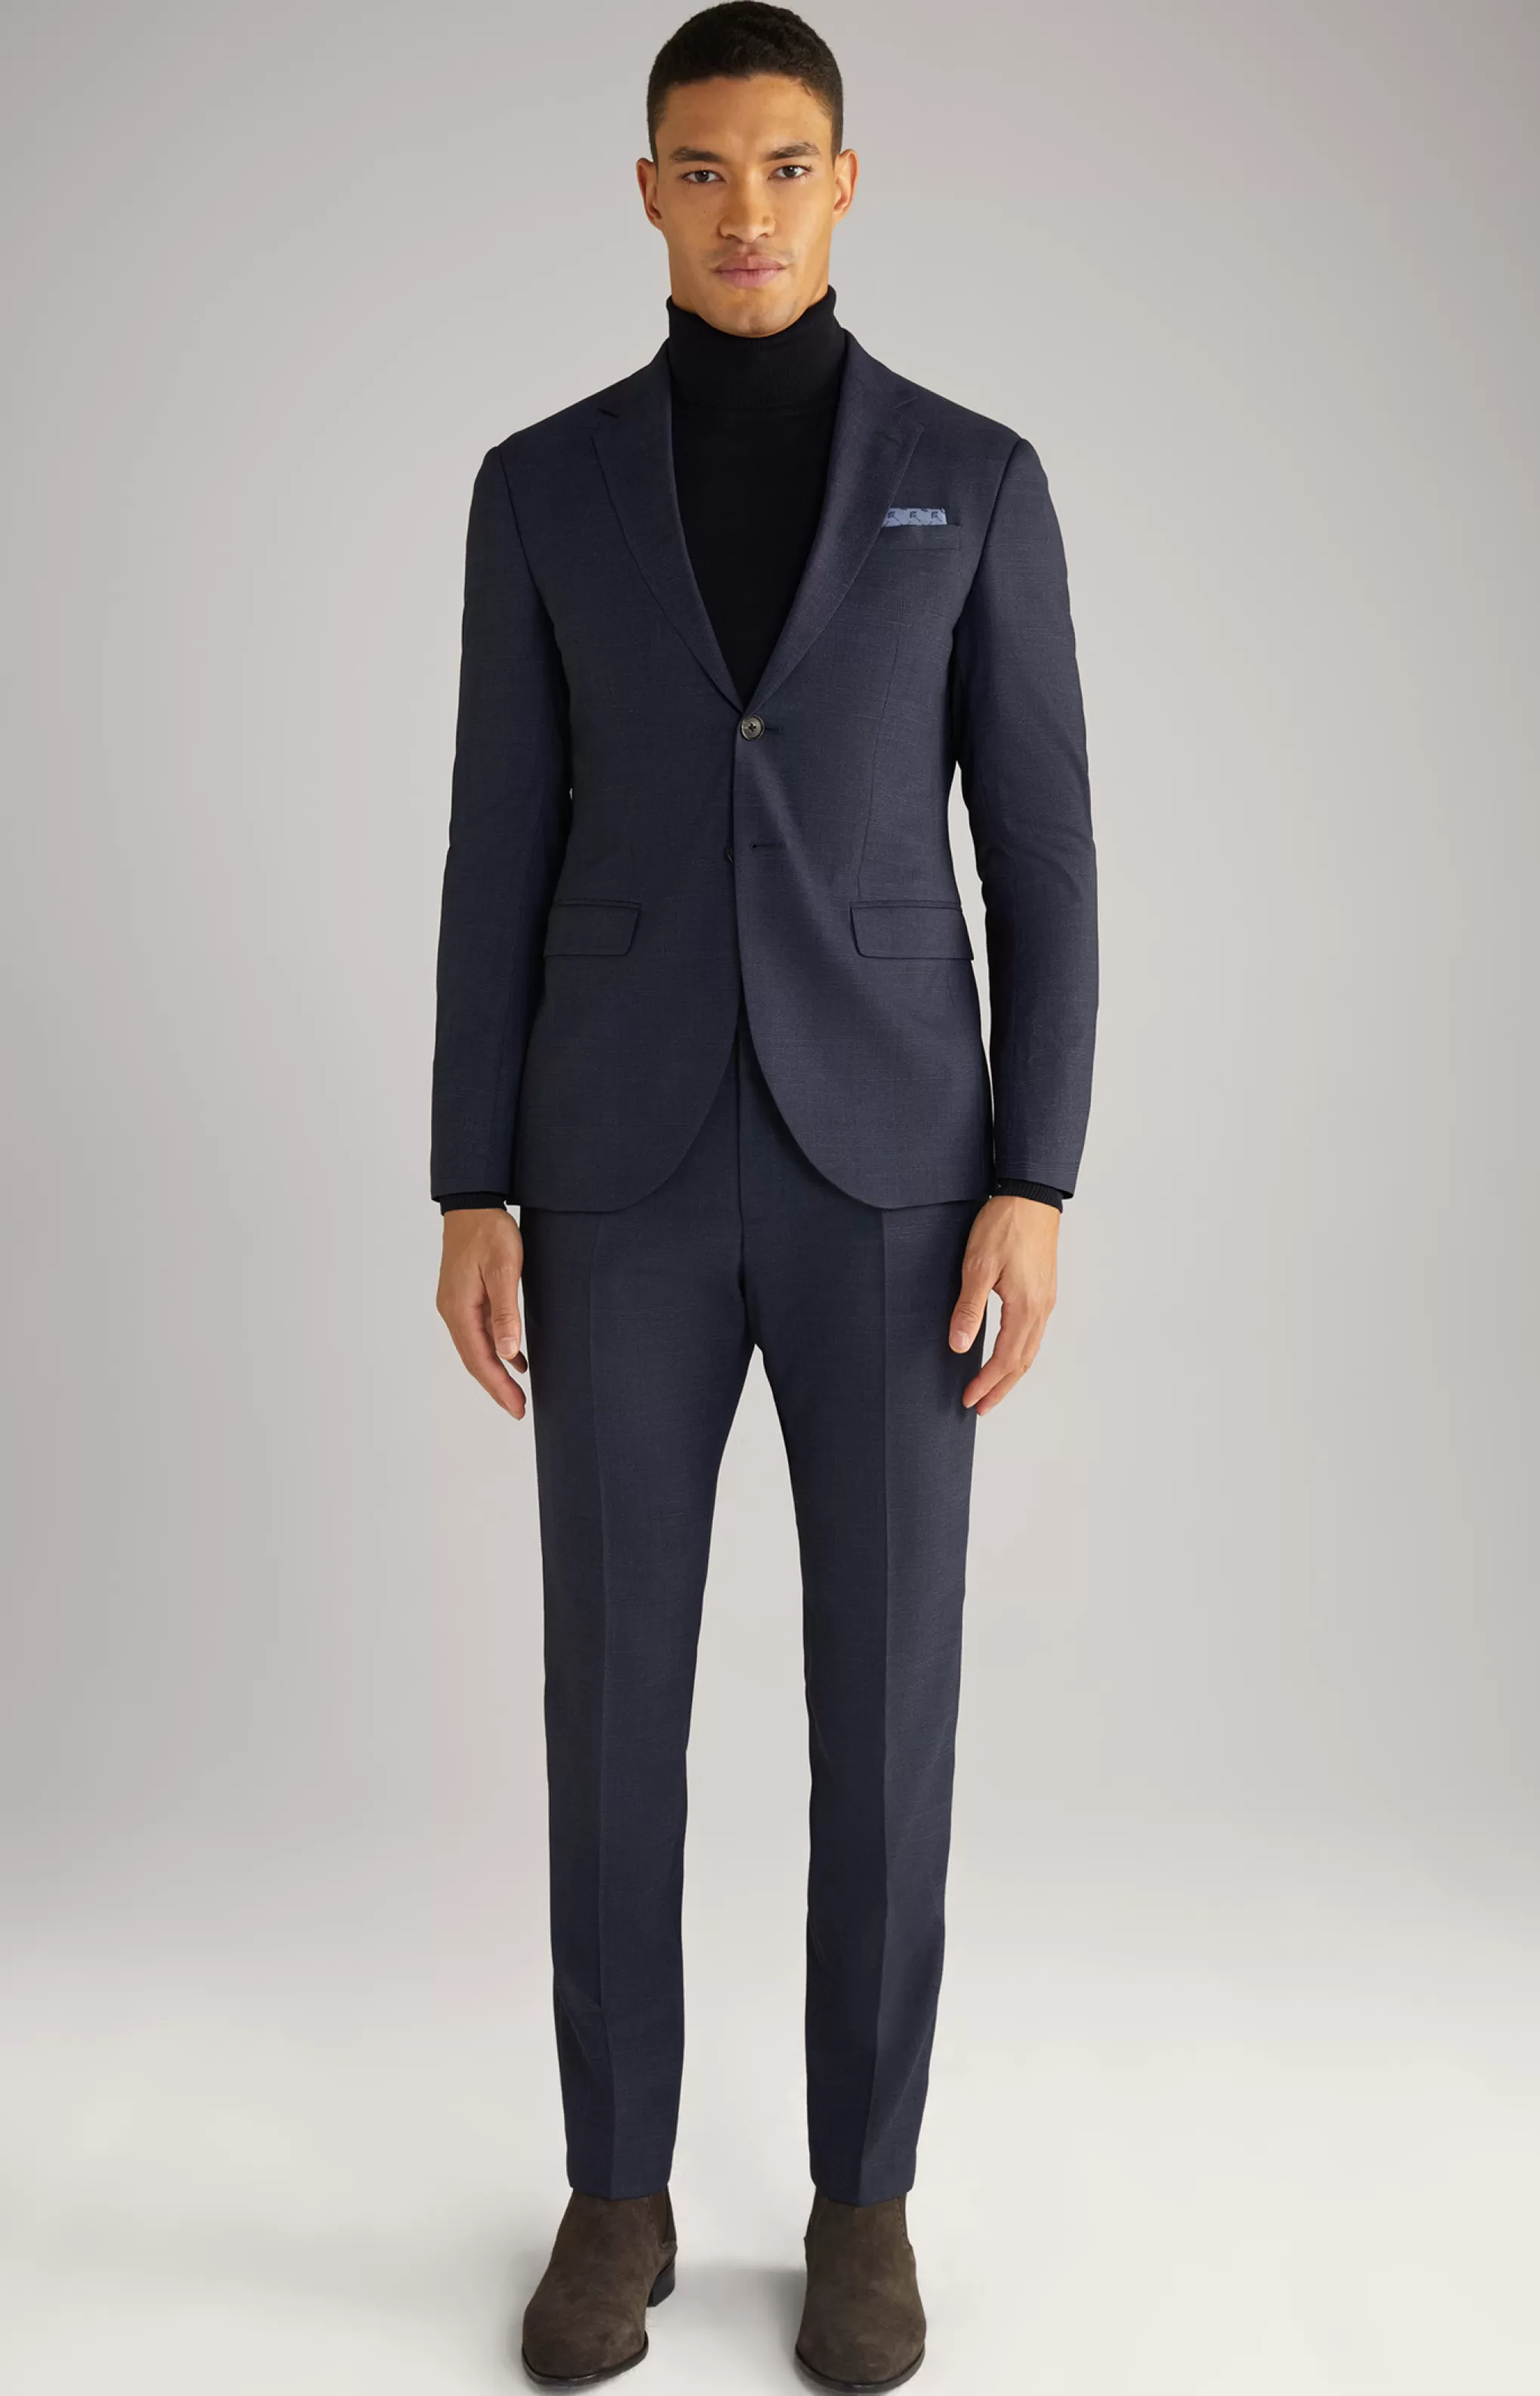 Suits | Clothing*JOOP Suits | Clothing Damon-Gun Suit in Dark Blue Check